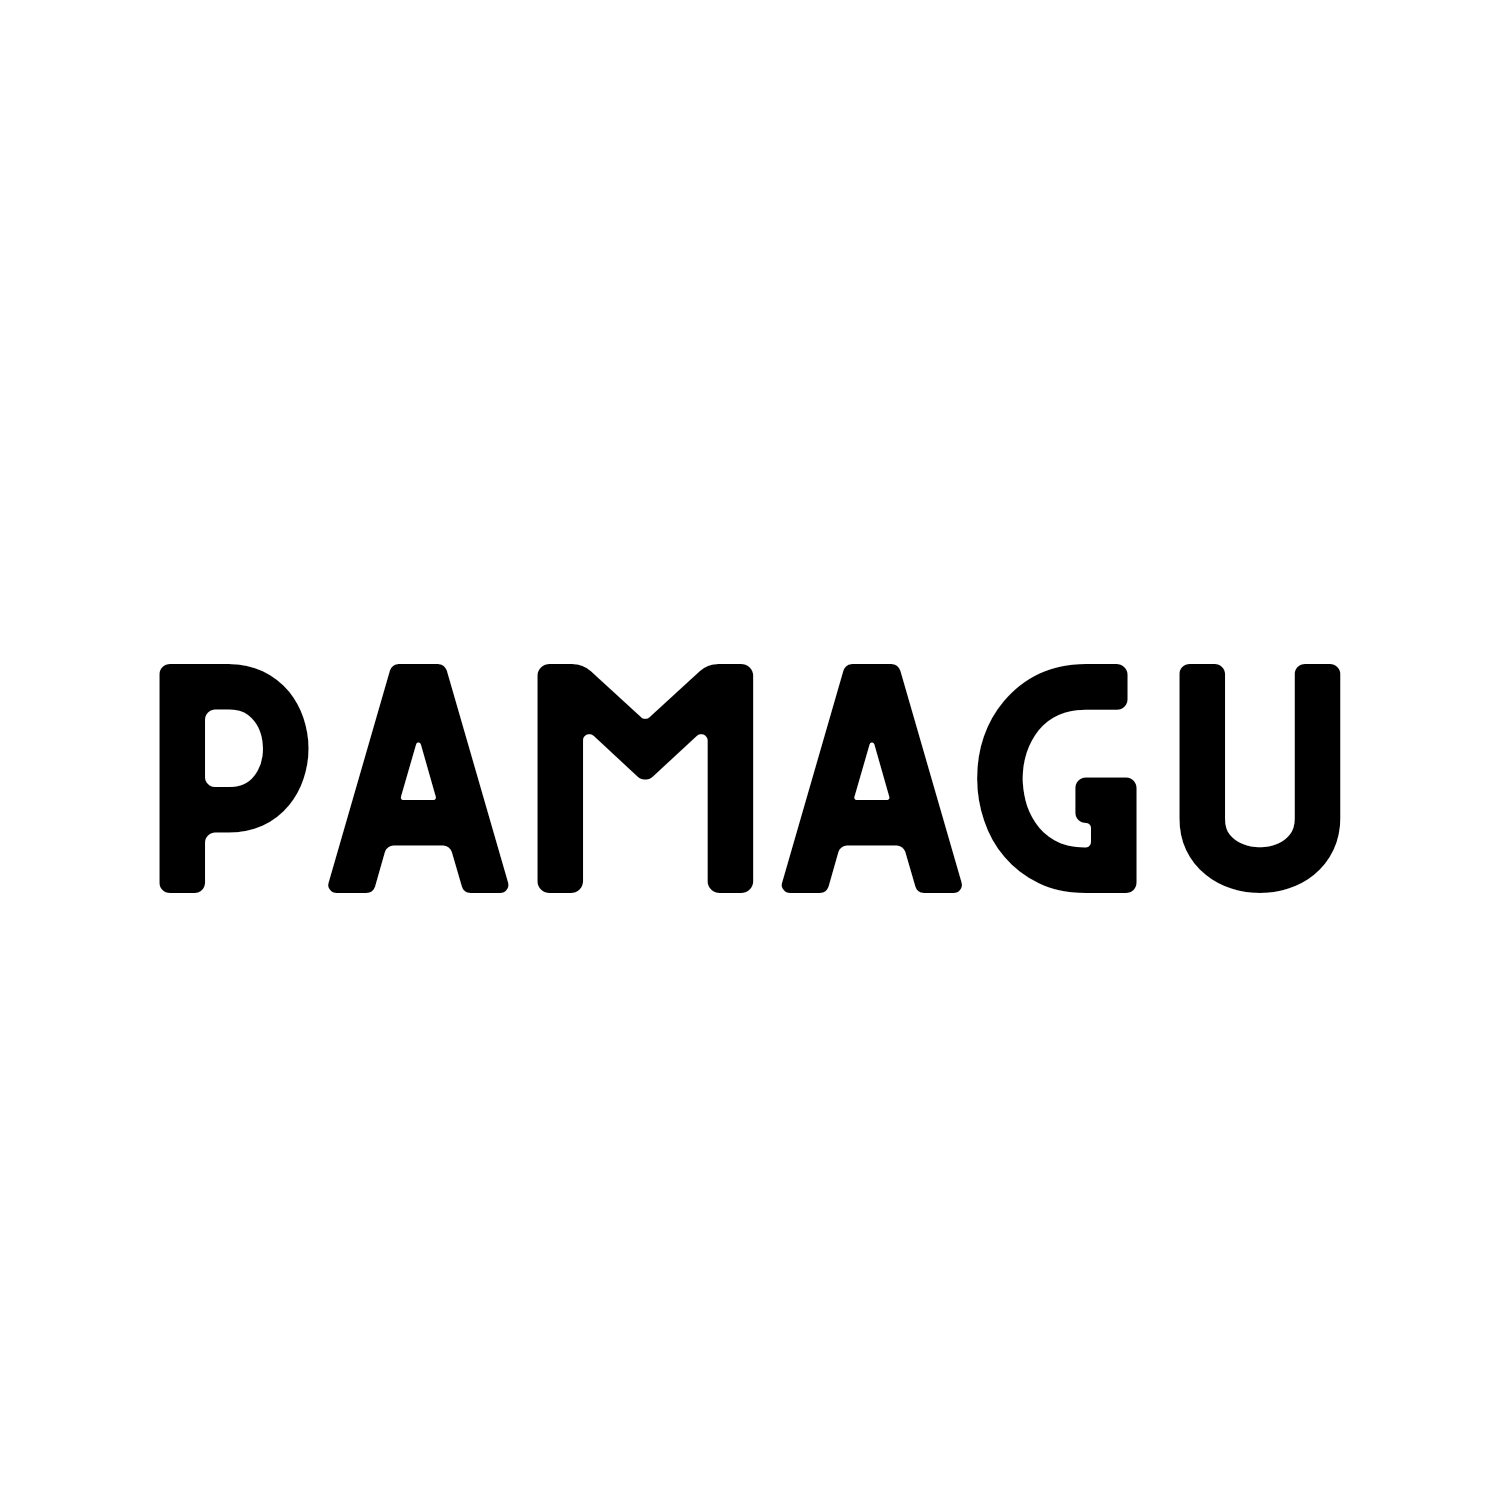 PAMAGUbrand